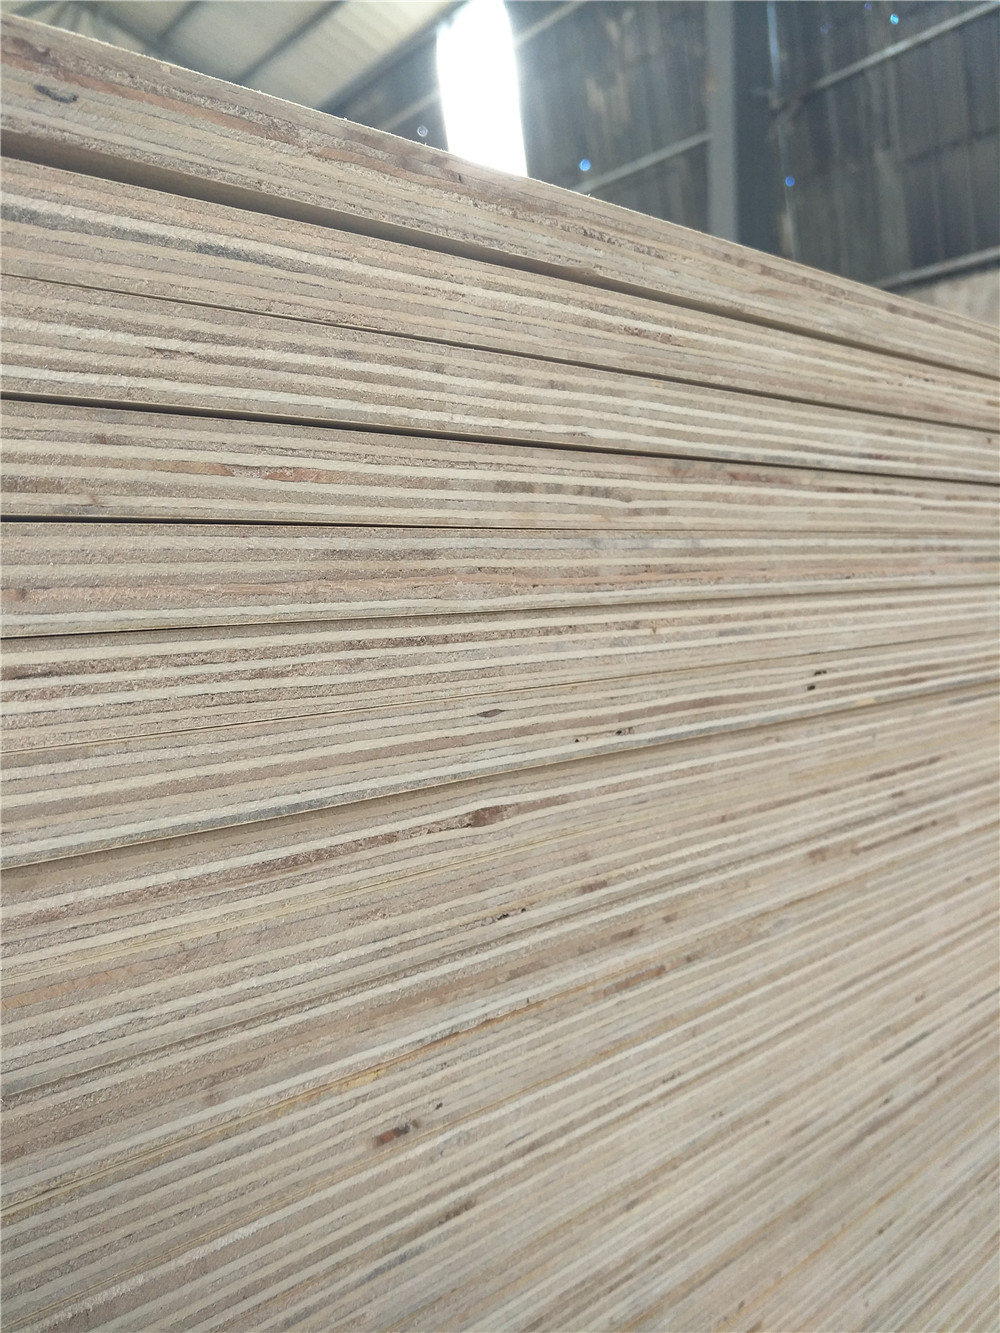 Radiata pine plywood(图3)